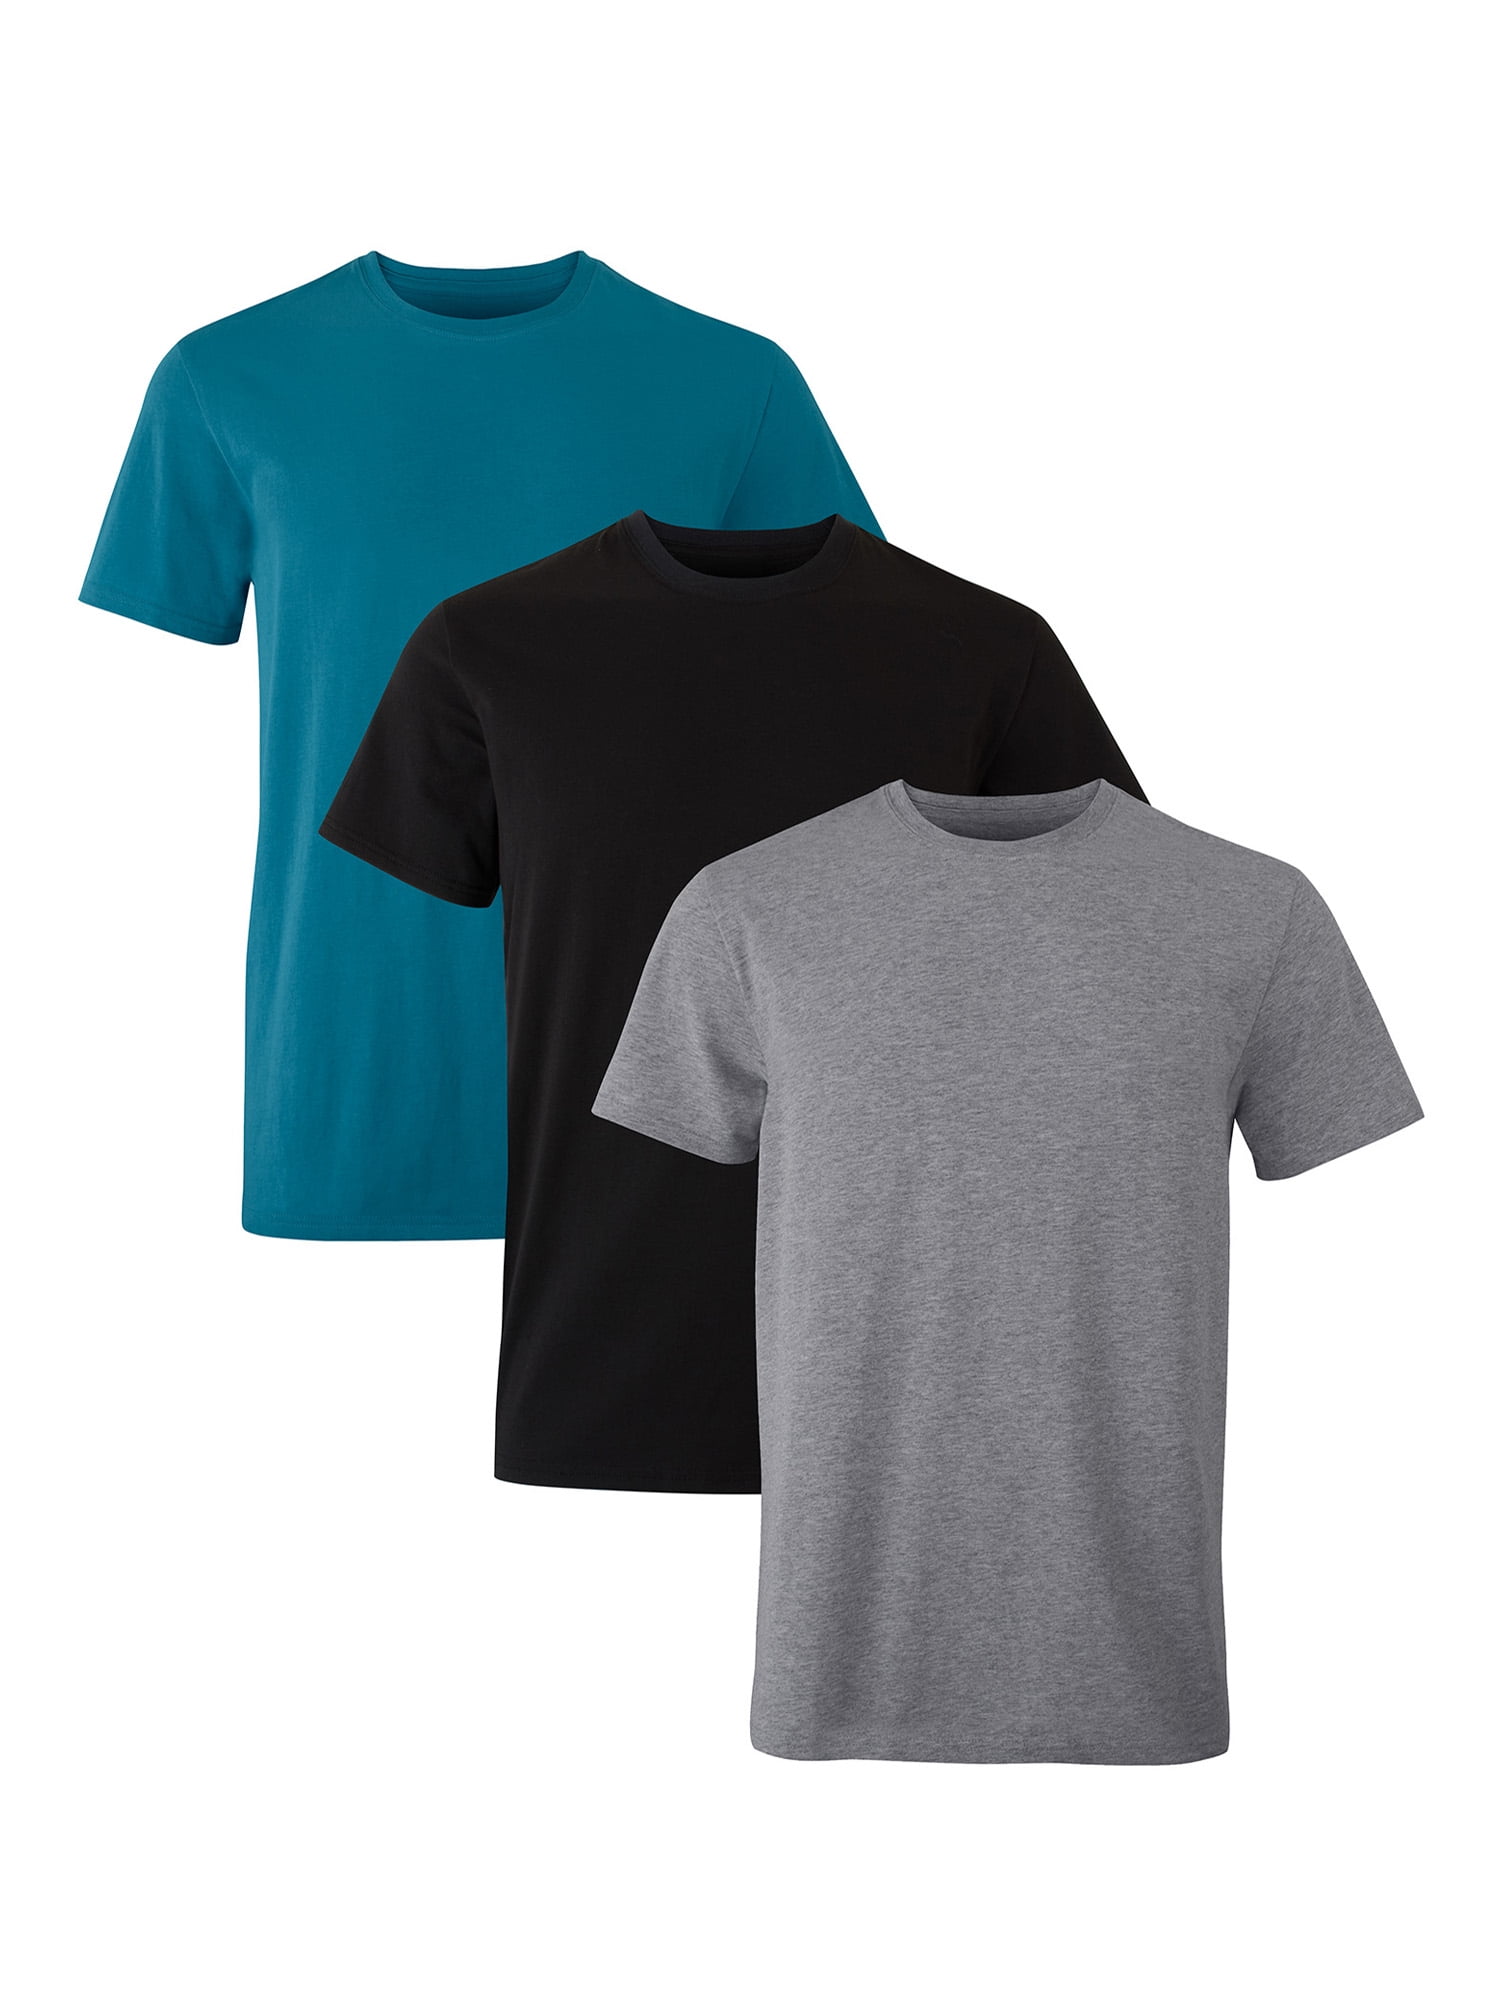 Hanes Originals Men’s T-Shirts Pack, Moisture-Wicking Stretch Cotton, 3 ...